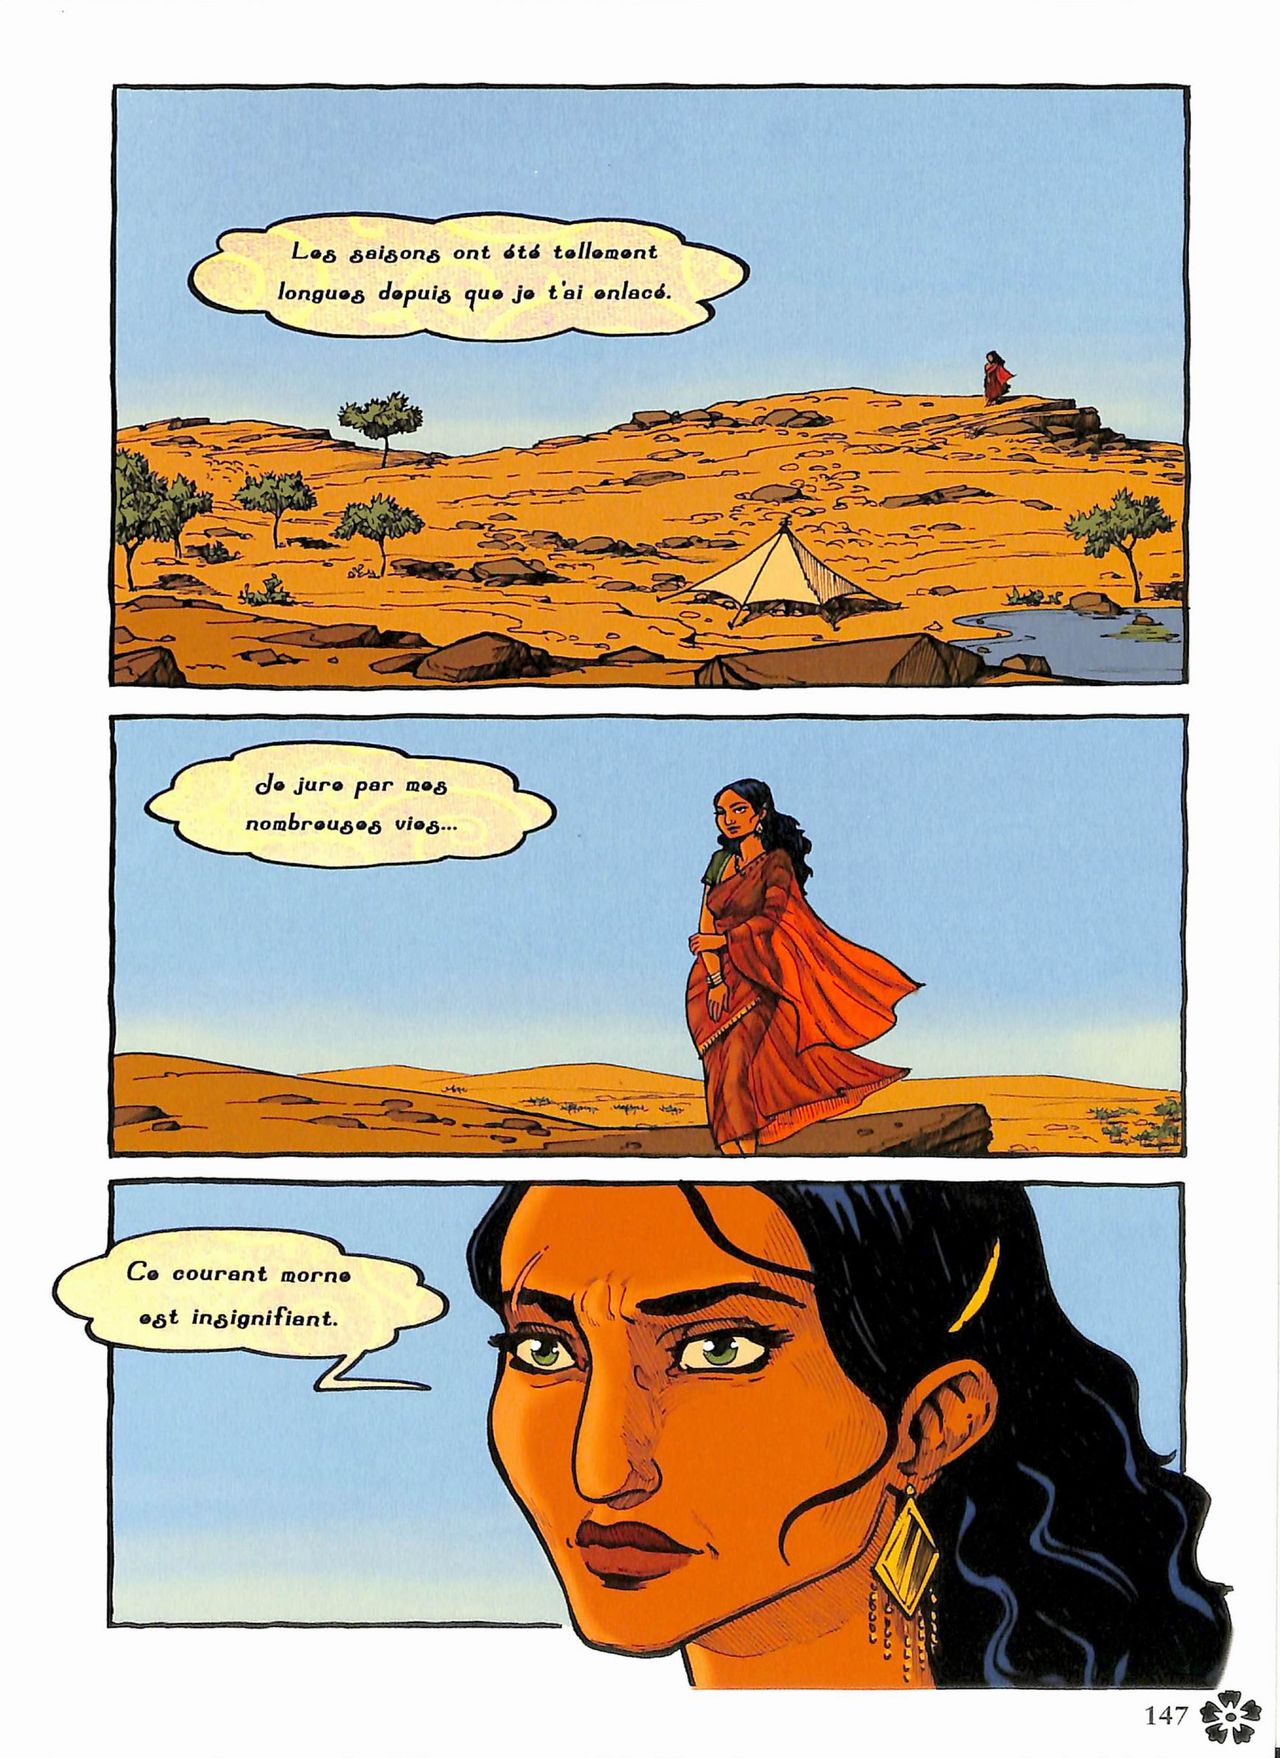 Kama Sutra en bandes dessinées - Kama Sutra with Comics numero d'image 147